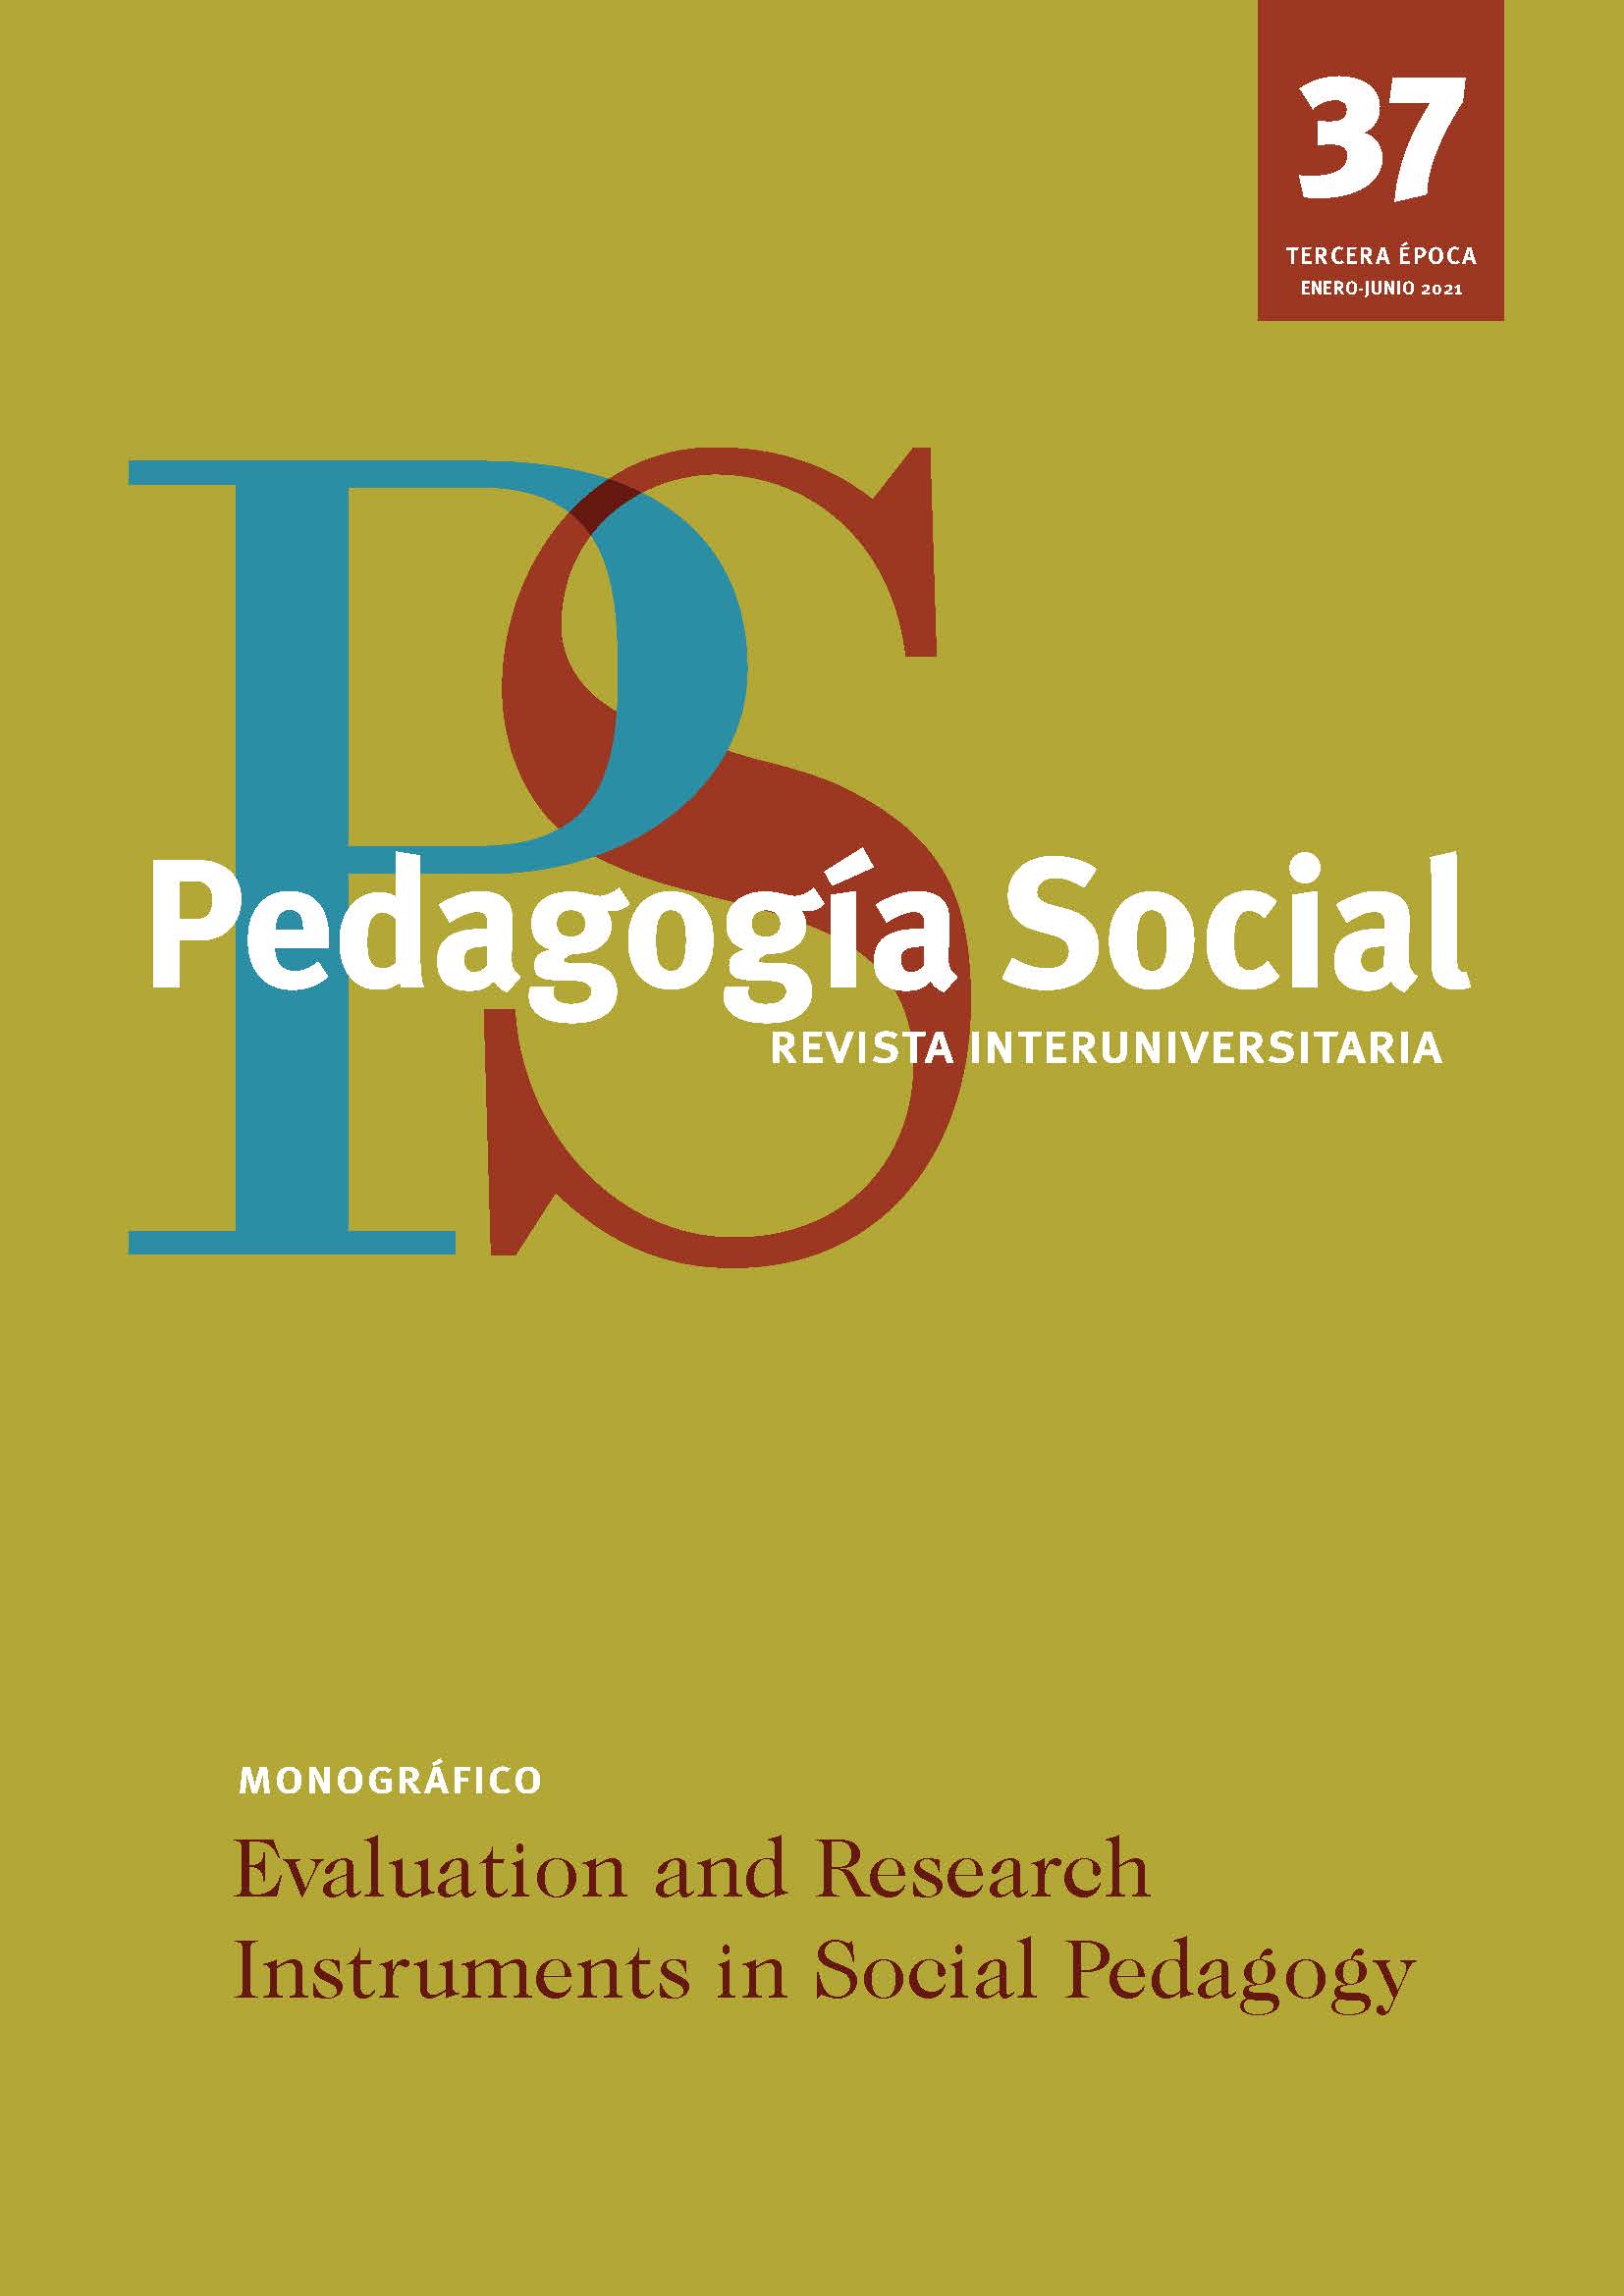 					Ver Núm. 37 (2021): Instrumentos de Evaluación e Investigación en Pedagogía Social
				